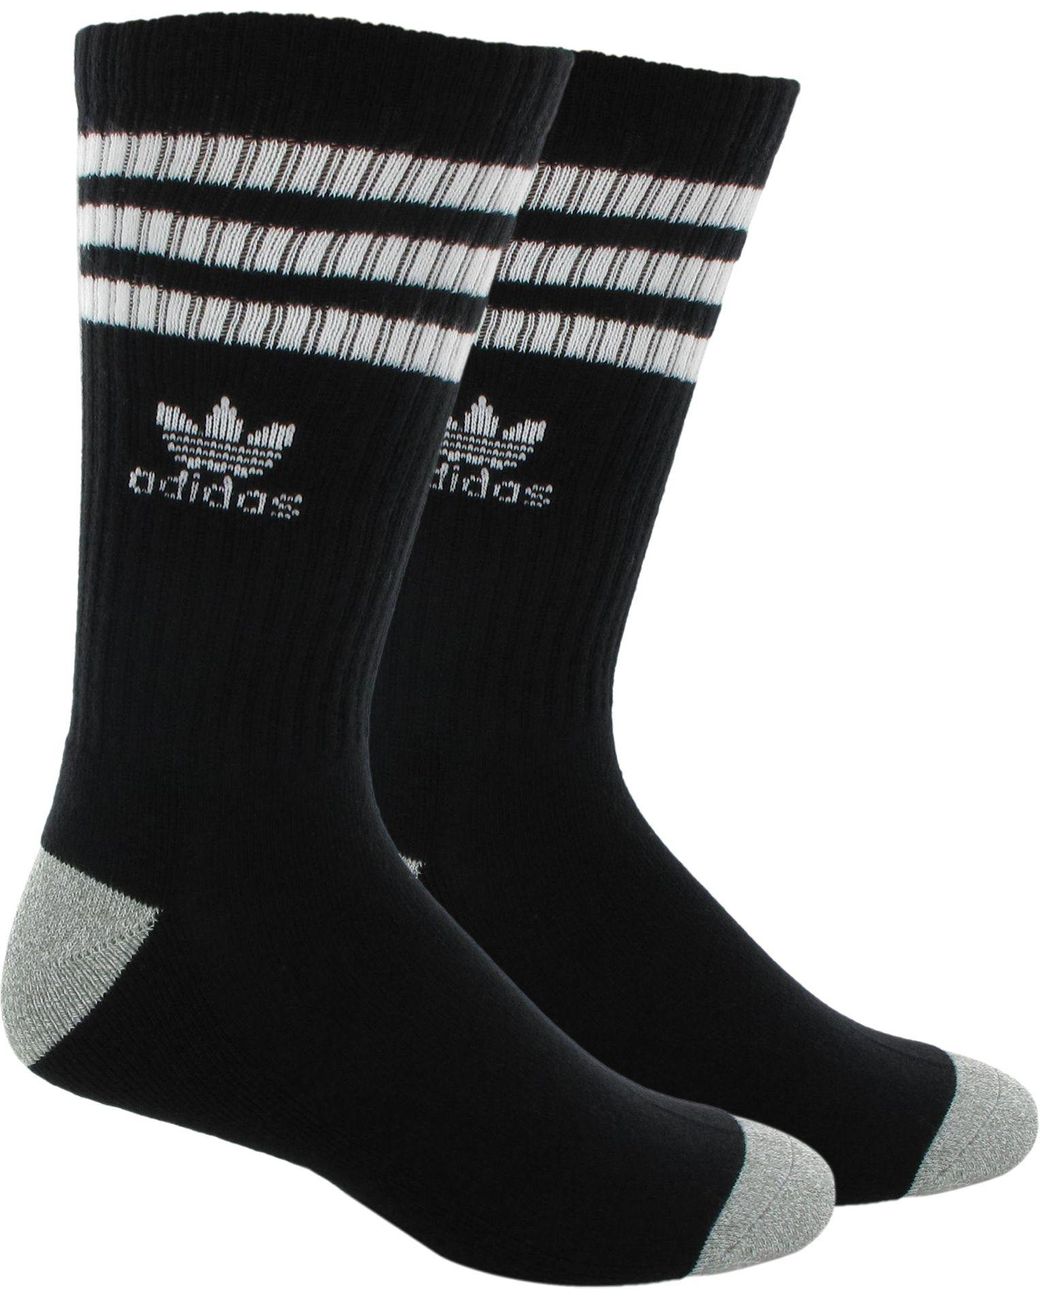 adidas Synthetic Originals Roller Crew Socks in Black for Men - Lyst